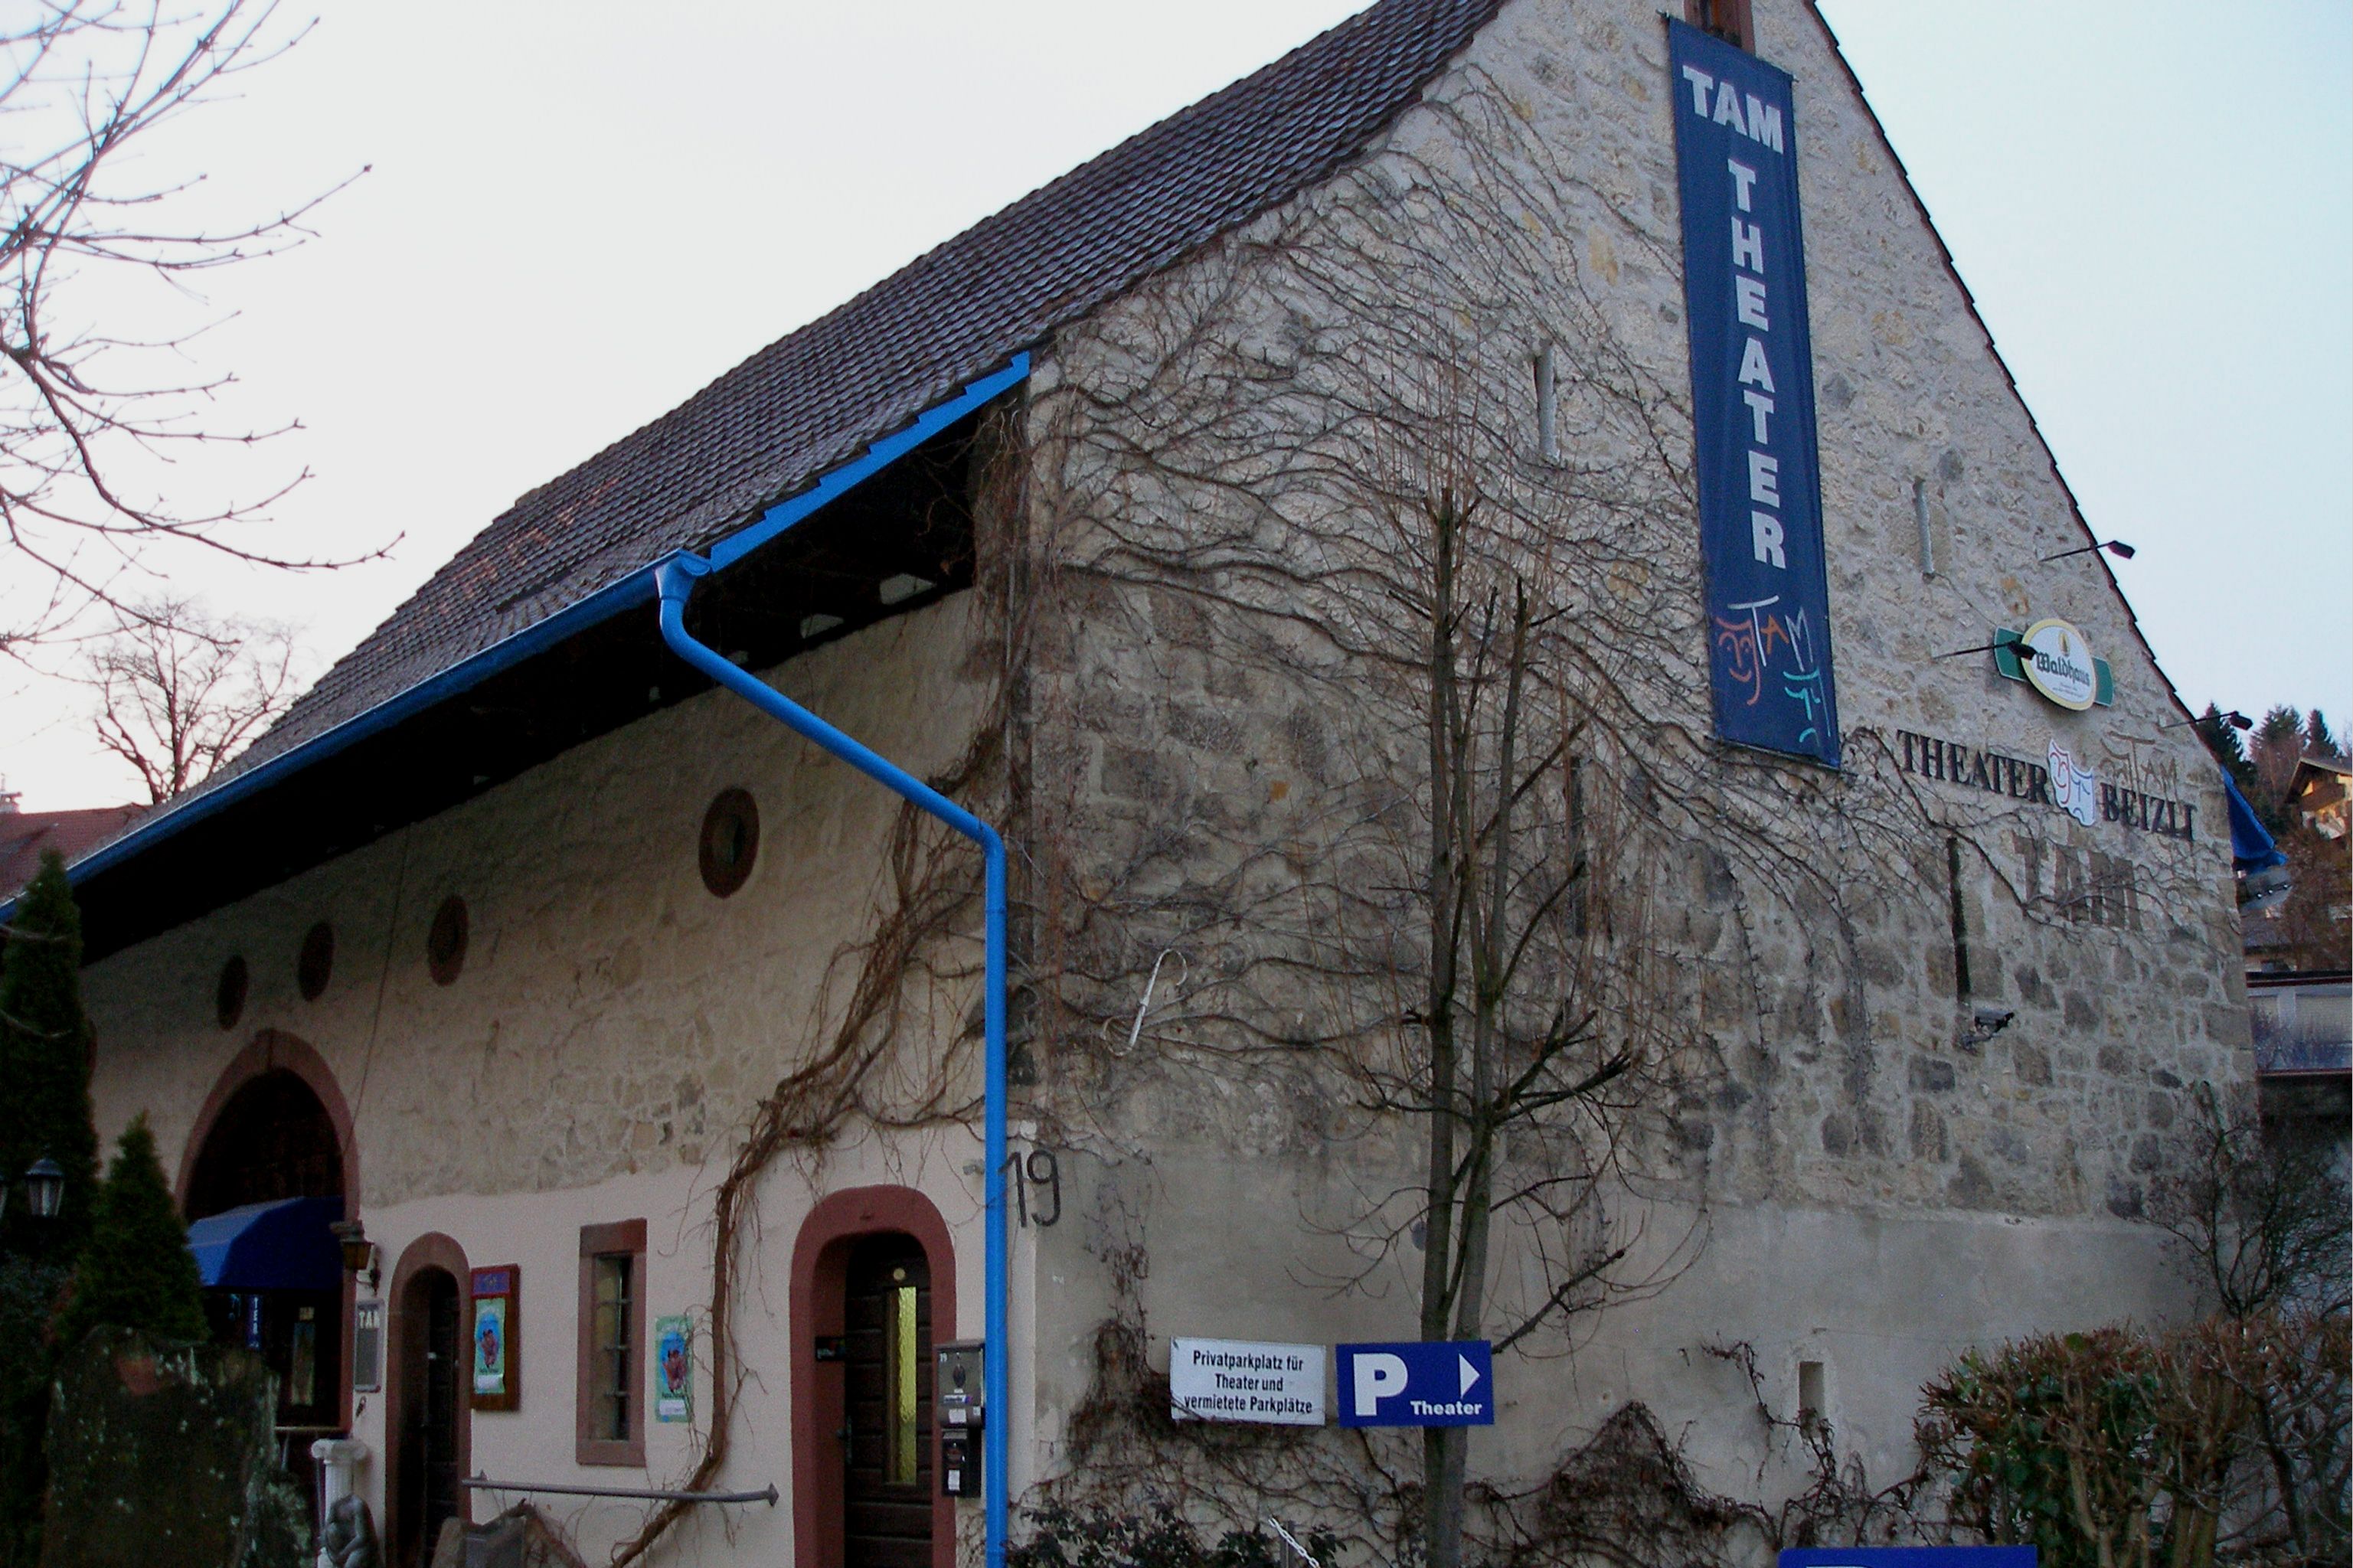 TAM Theater am Mühlenrain